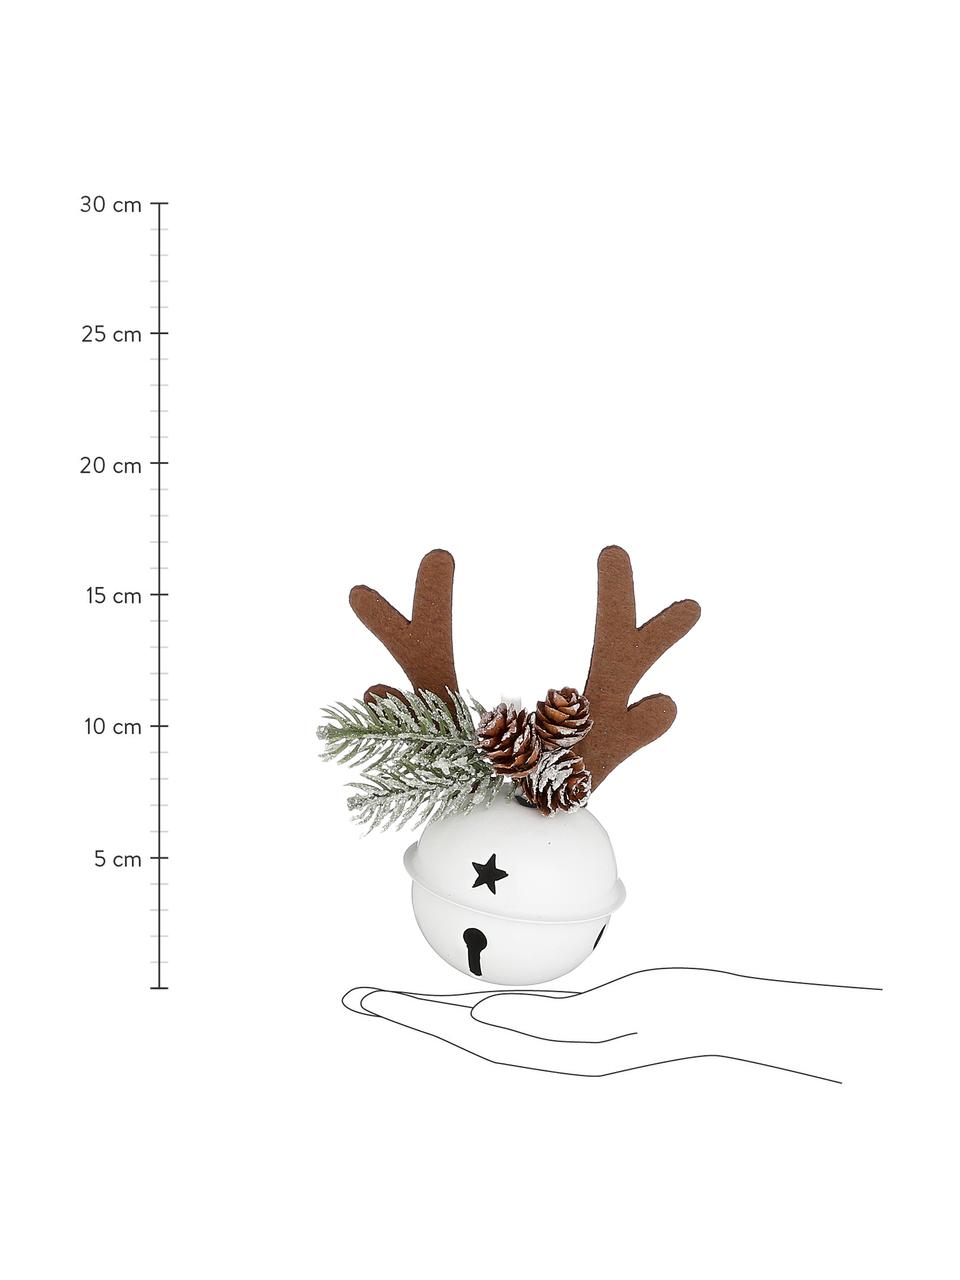 Ozdoby na stromeček Reindeer, 2 ks, Potažené železo, Bílá, hnědá, zelená, Š 11 cm, V 17 cm